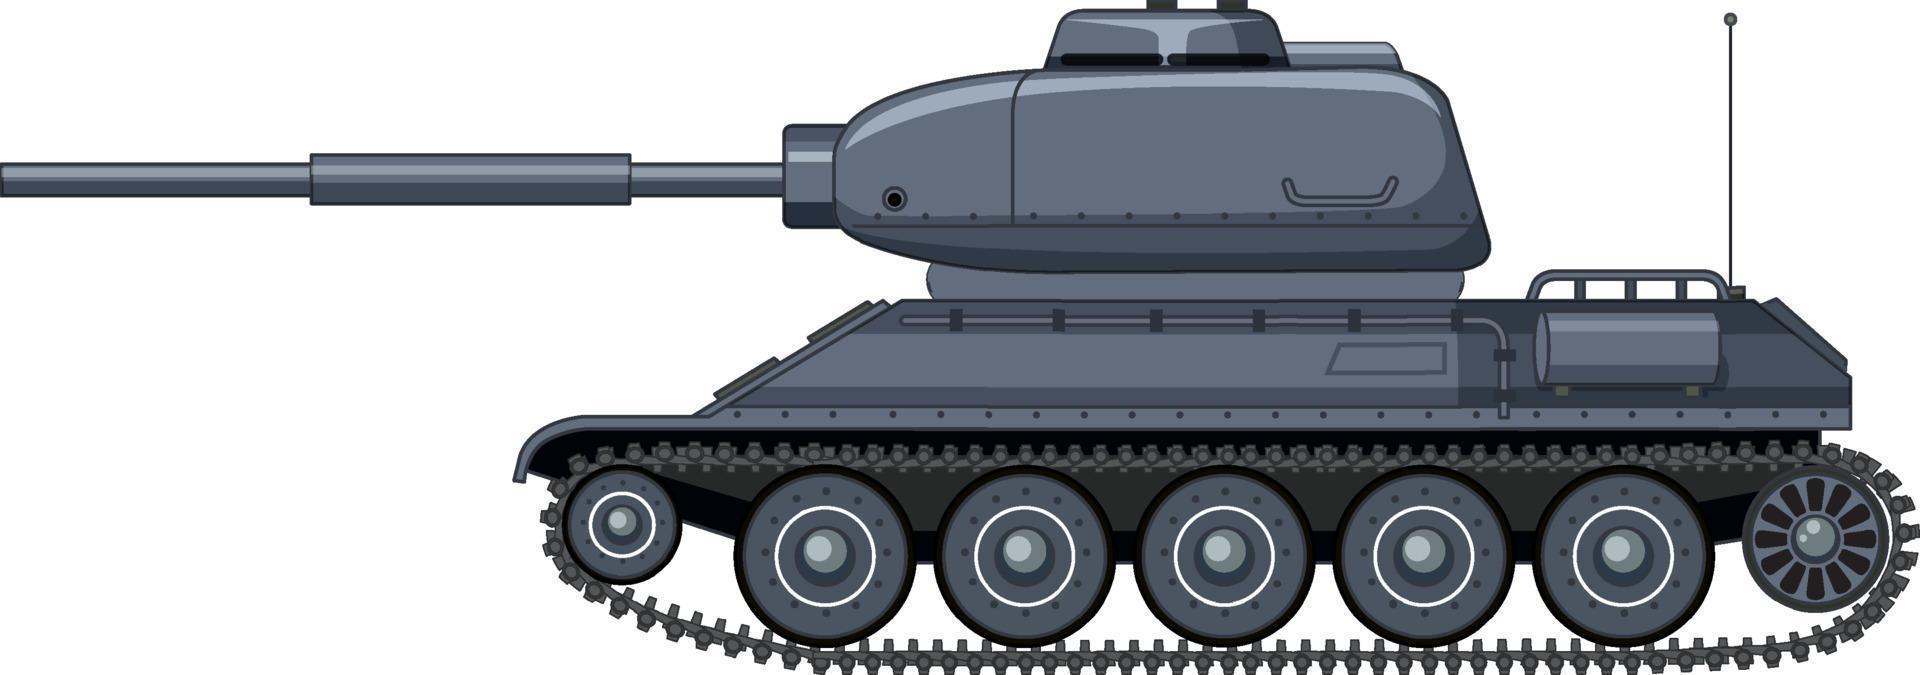 tanque de batalla militar sobre fondo blanco vector